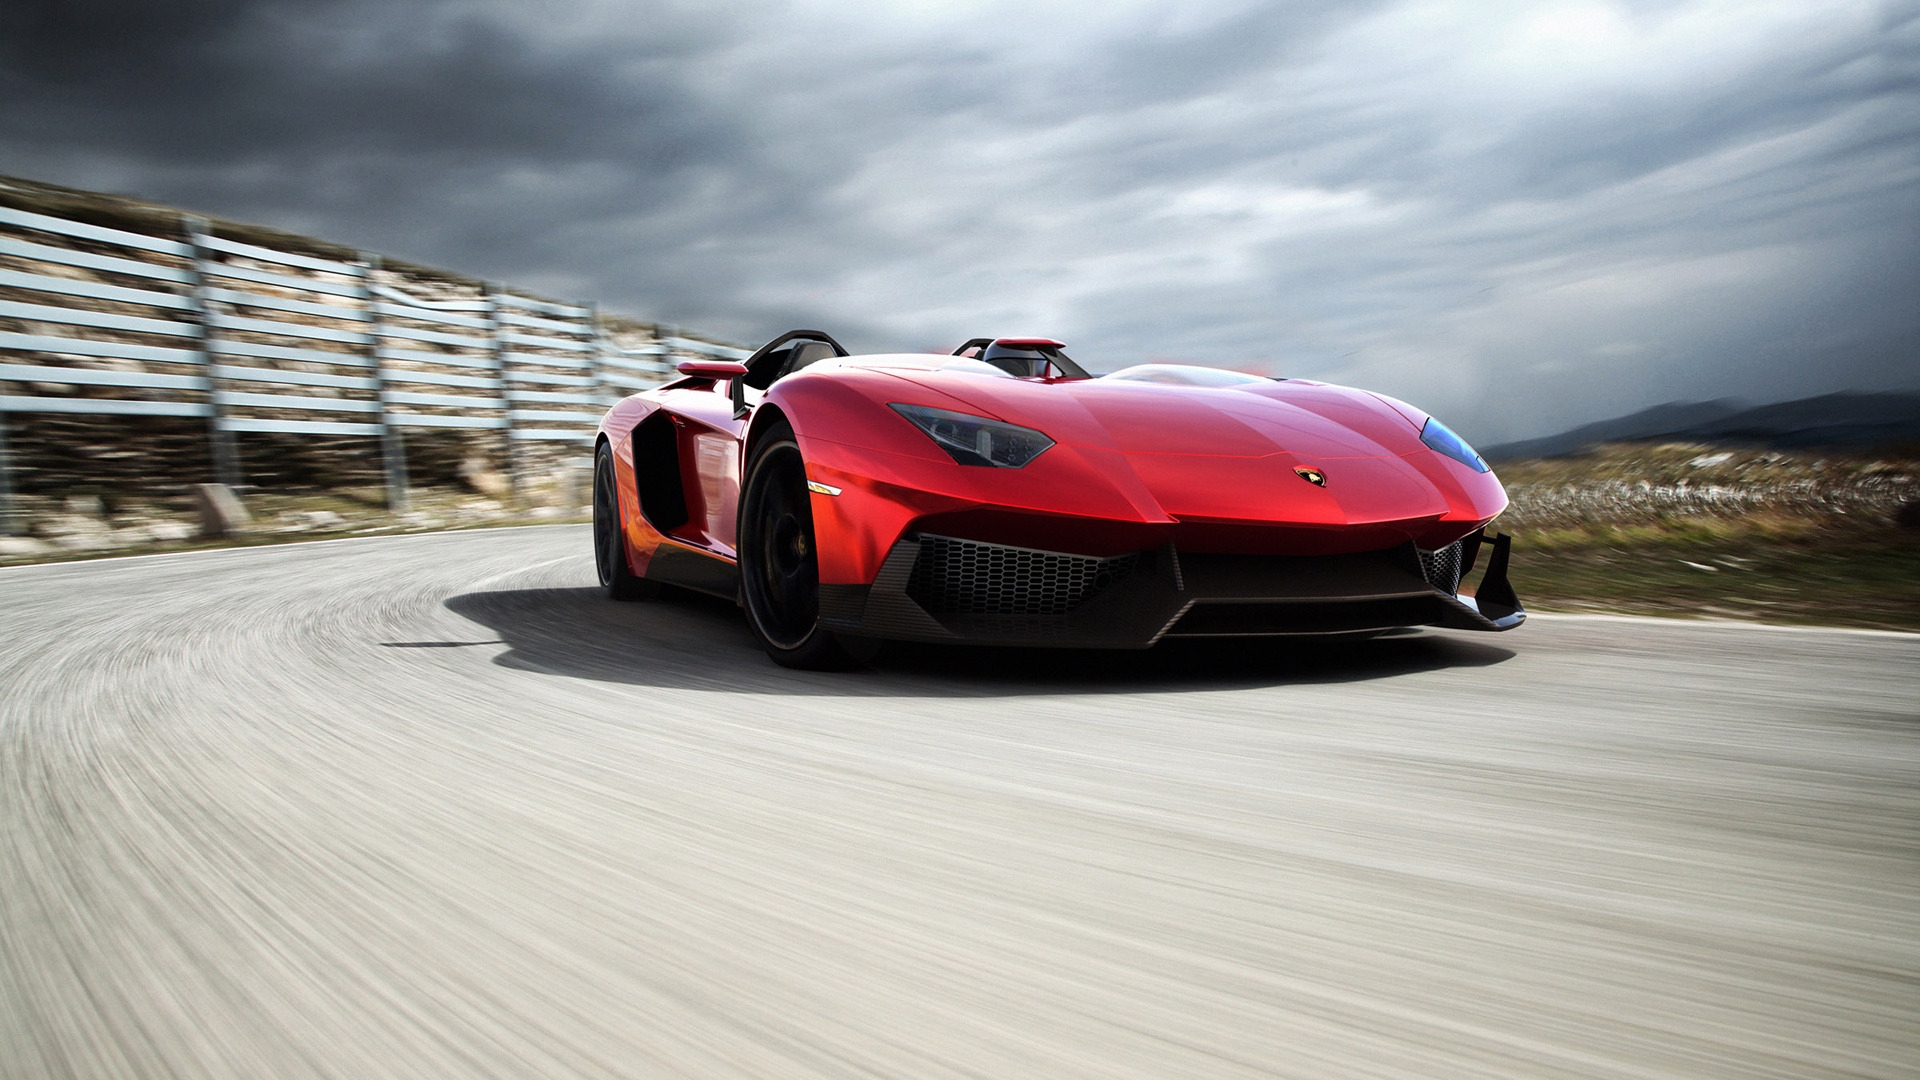 2012 Lamborghini Aventador J Speed for 1920 x 1080 HDTV 1080p resolution